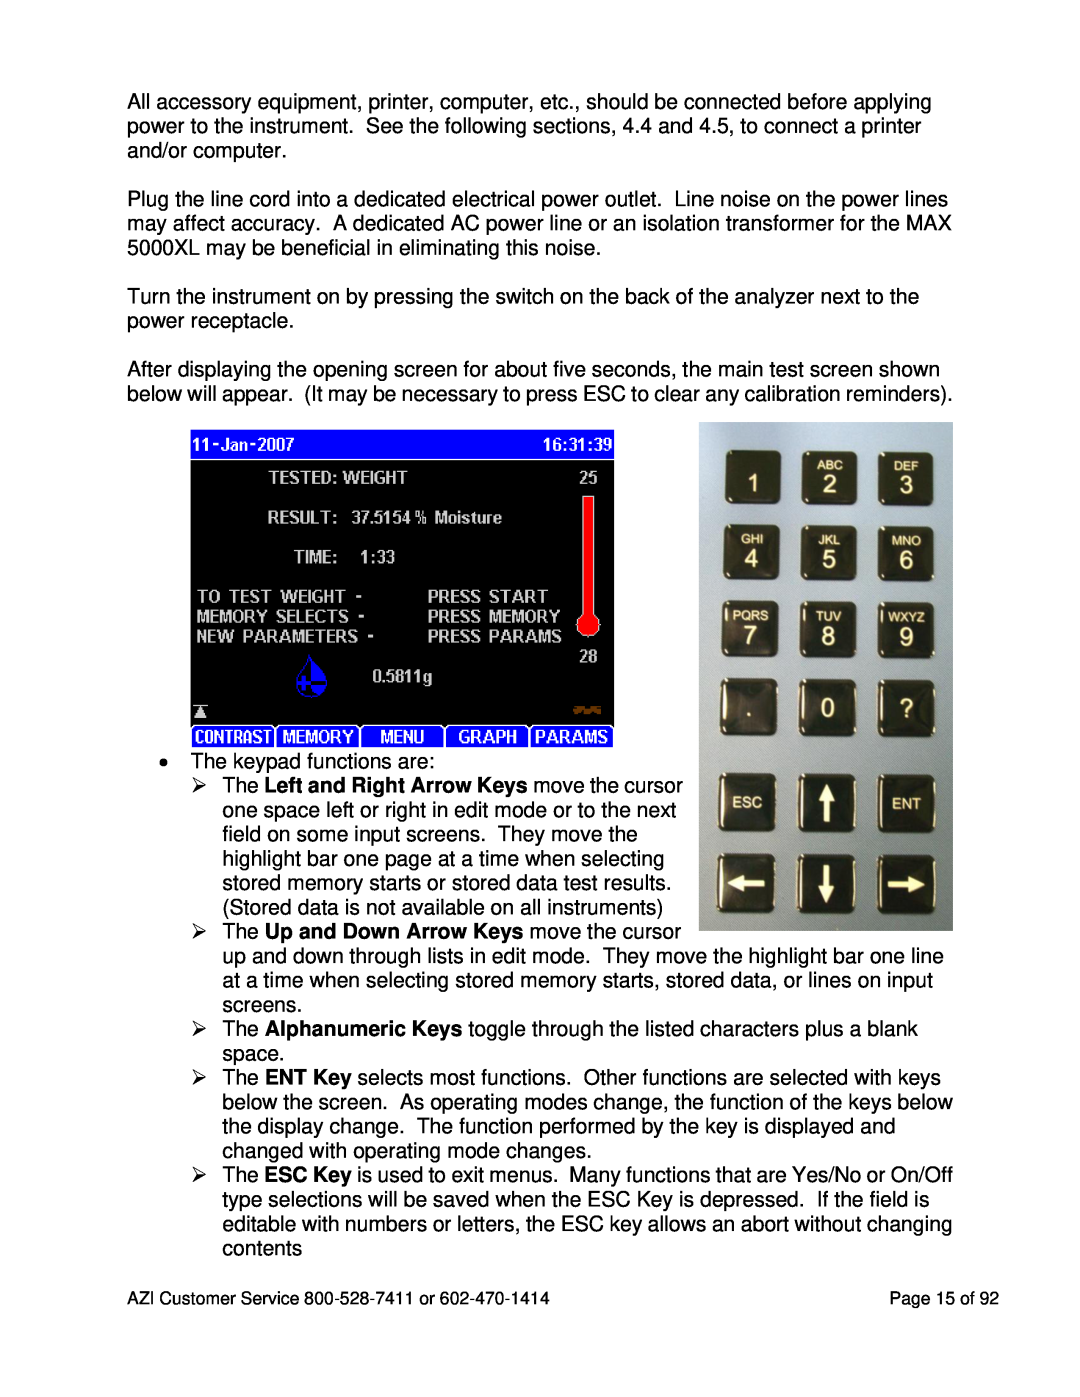 Arizona MAX-5000XL user manual  The Up and Down Arrow Keys move the cursor 